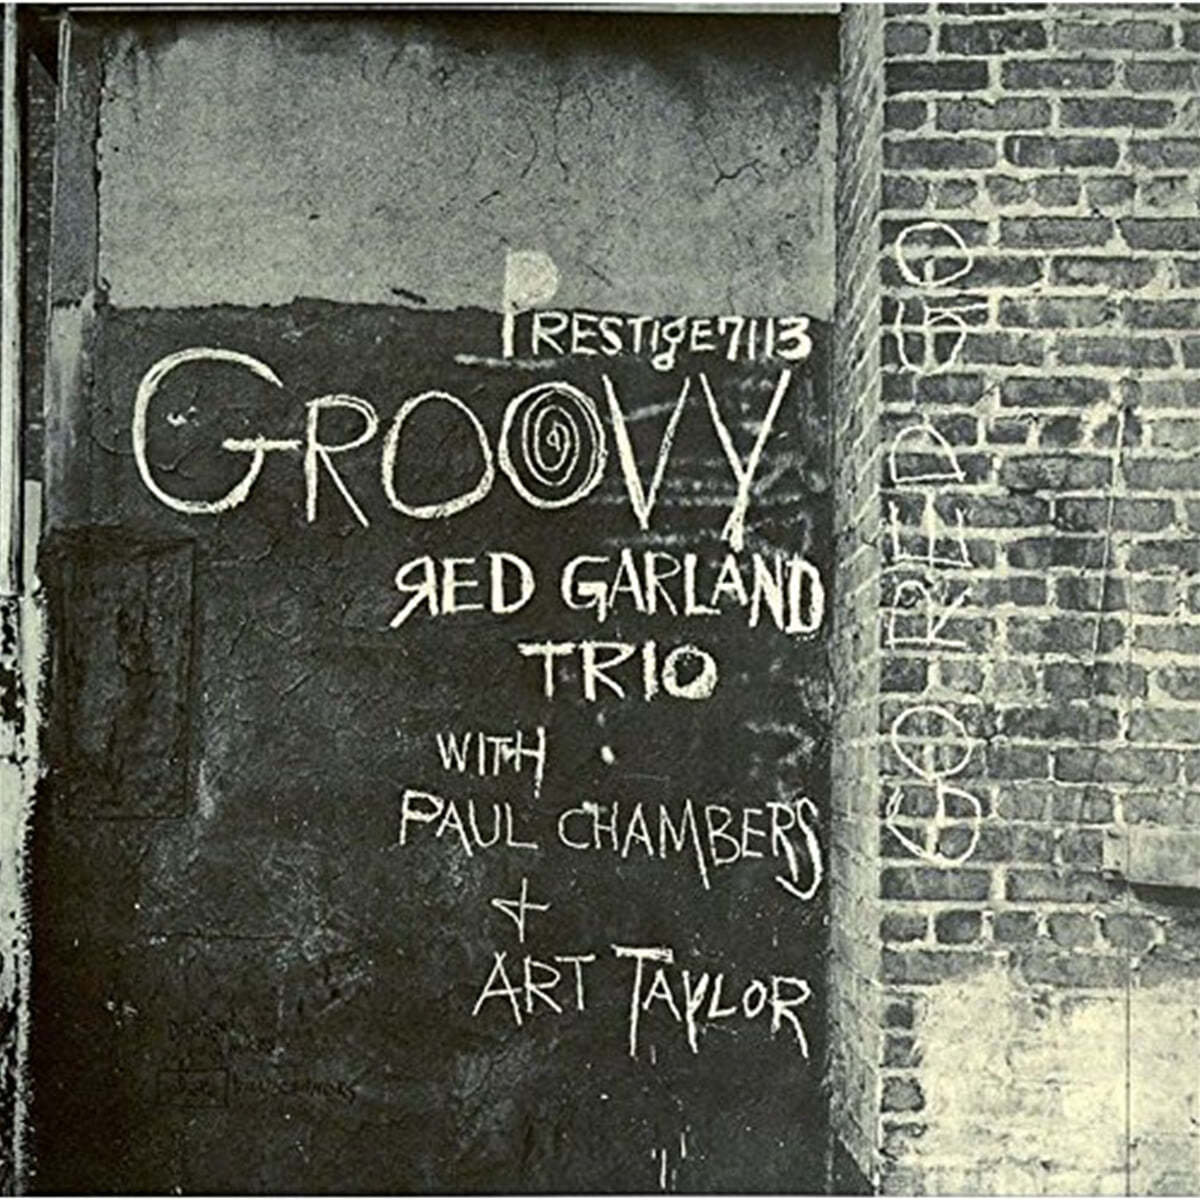 Red Garland (레드 갈란드) - Groovy 